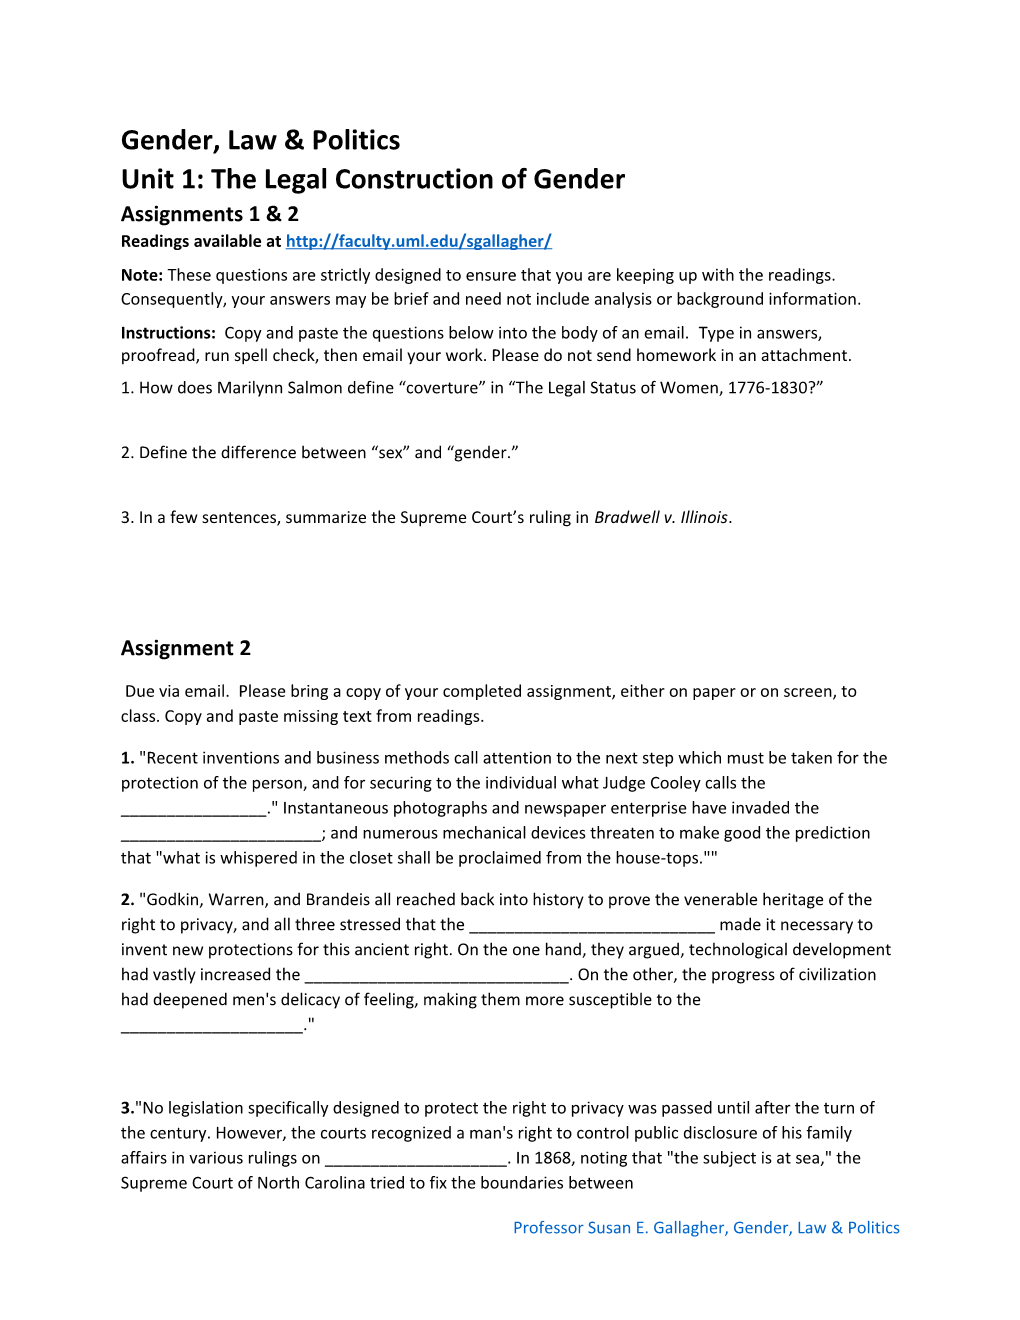 Unit 1: the Legal Construction of Gender